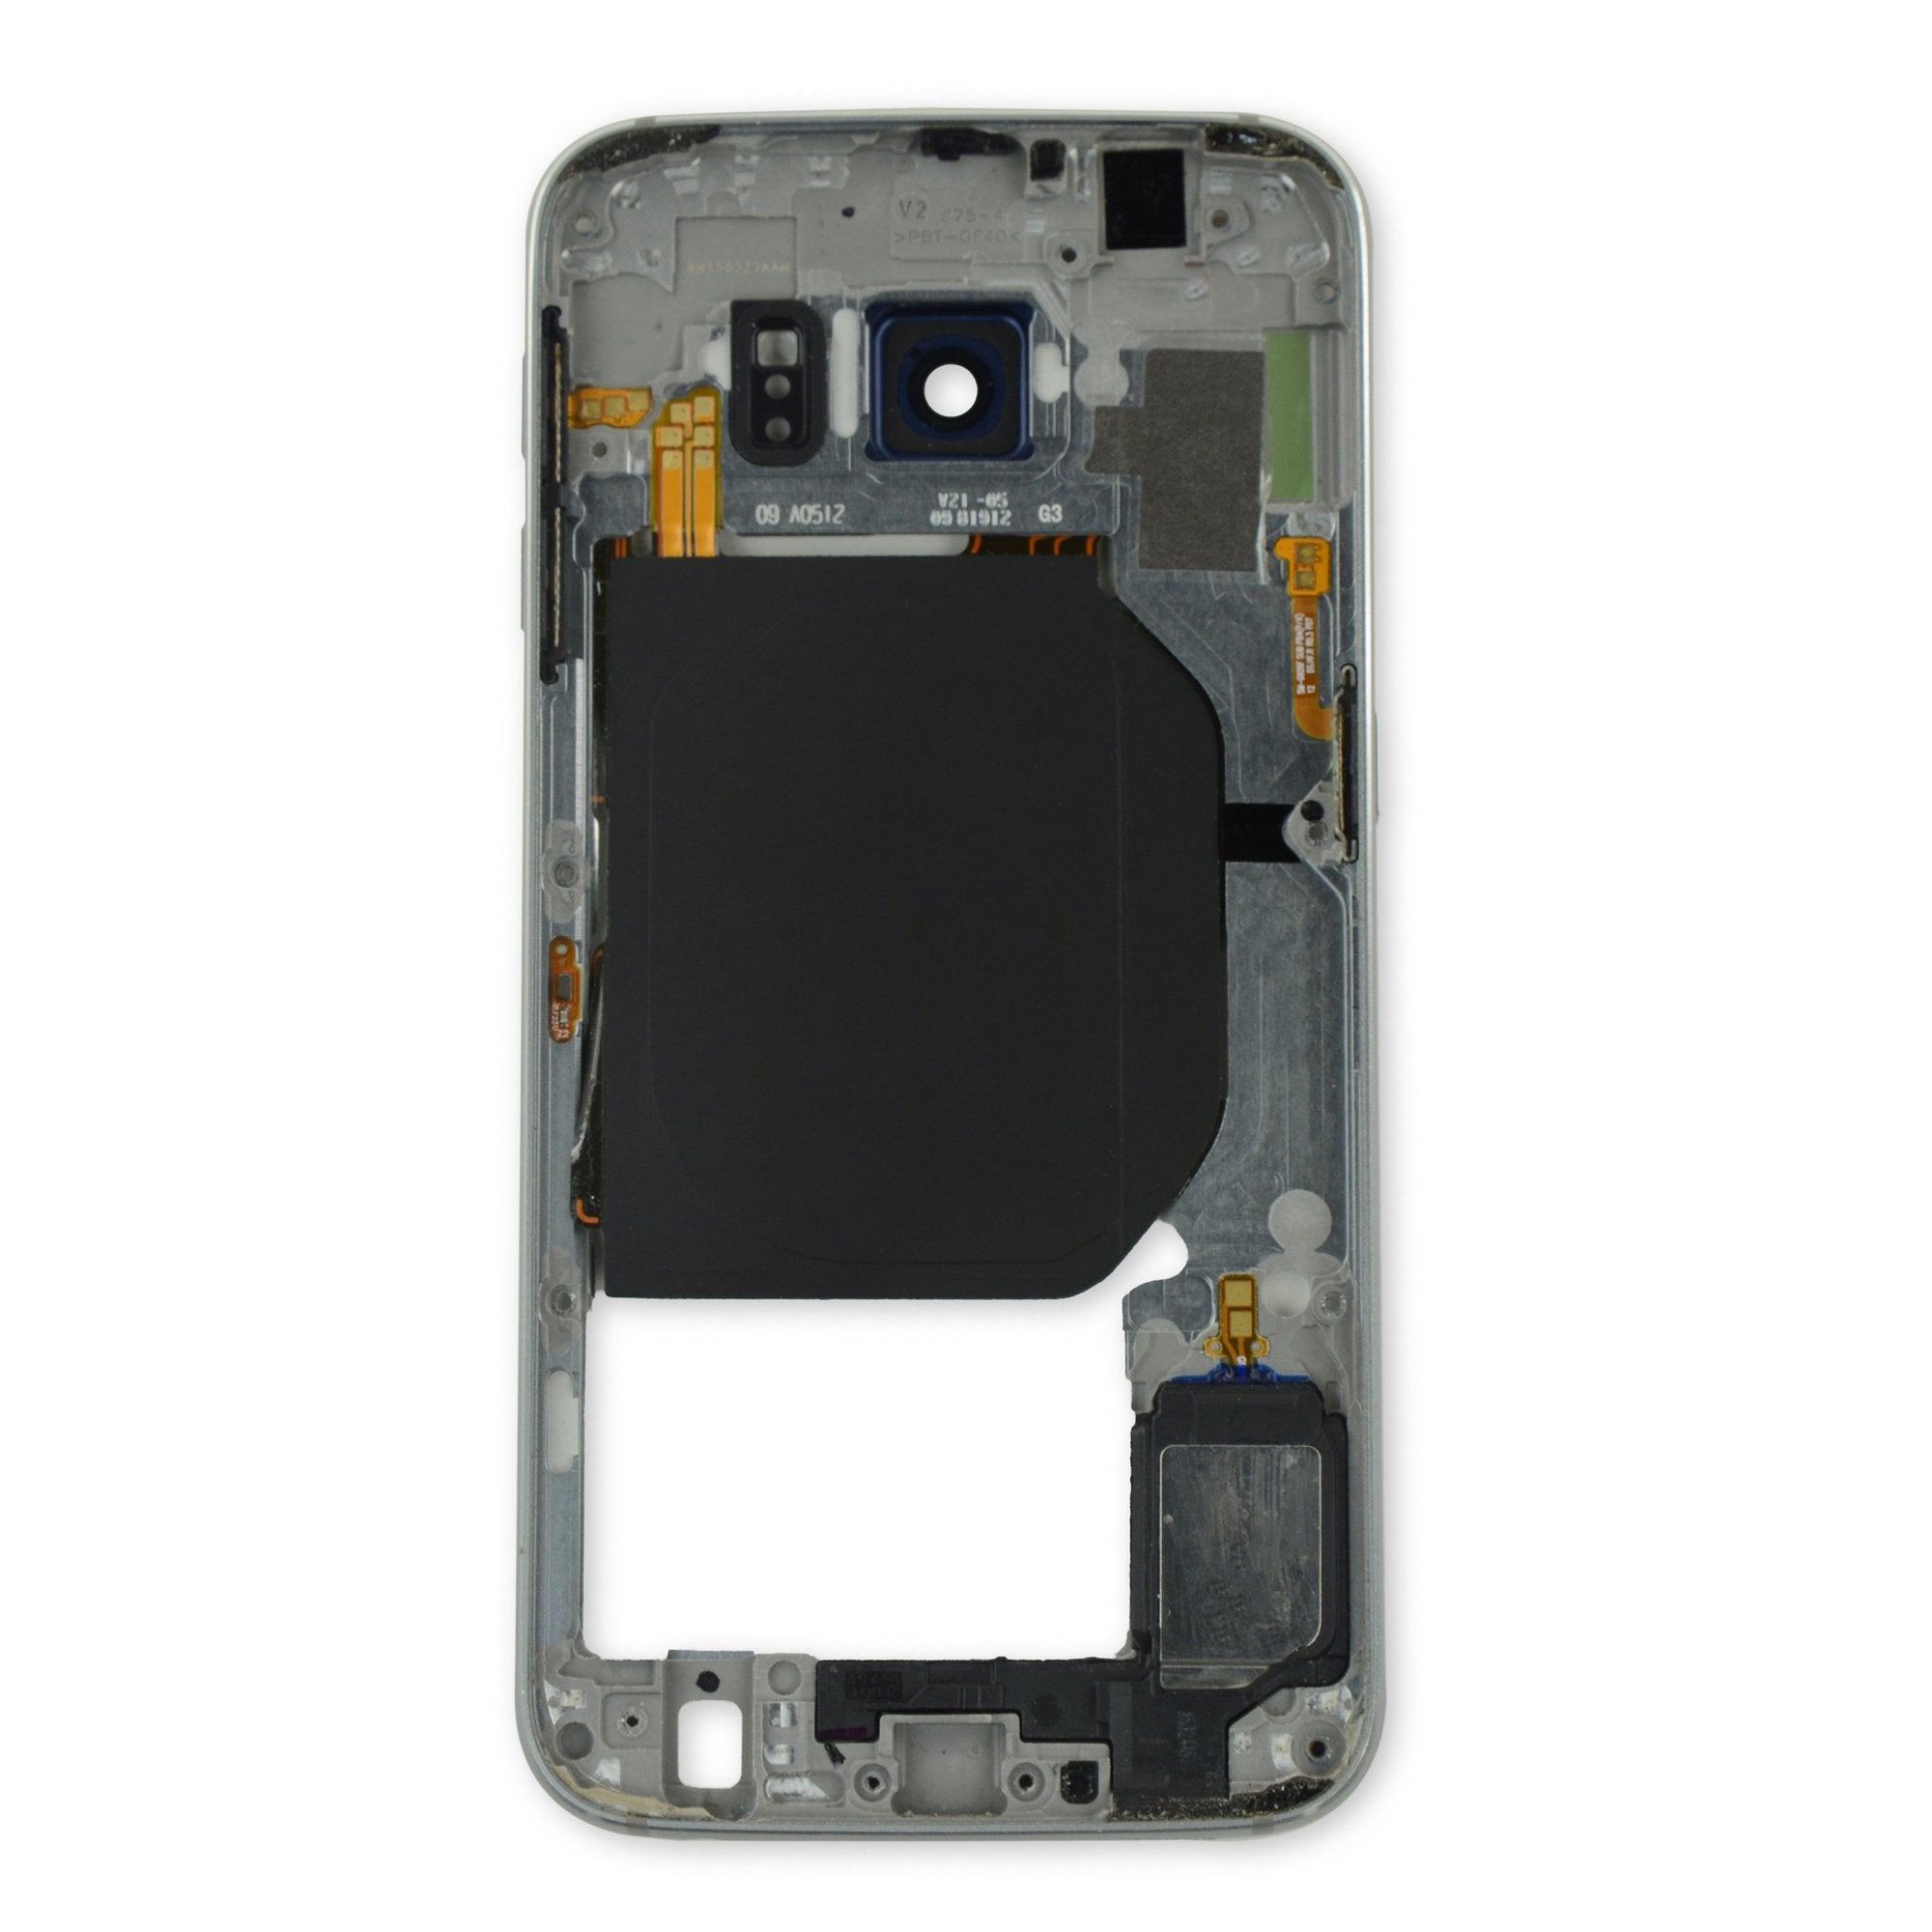 Galaxy S6 Midframe (Sprint) White Used, A-Stock